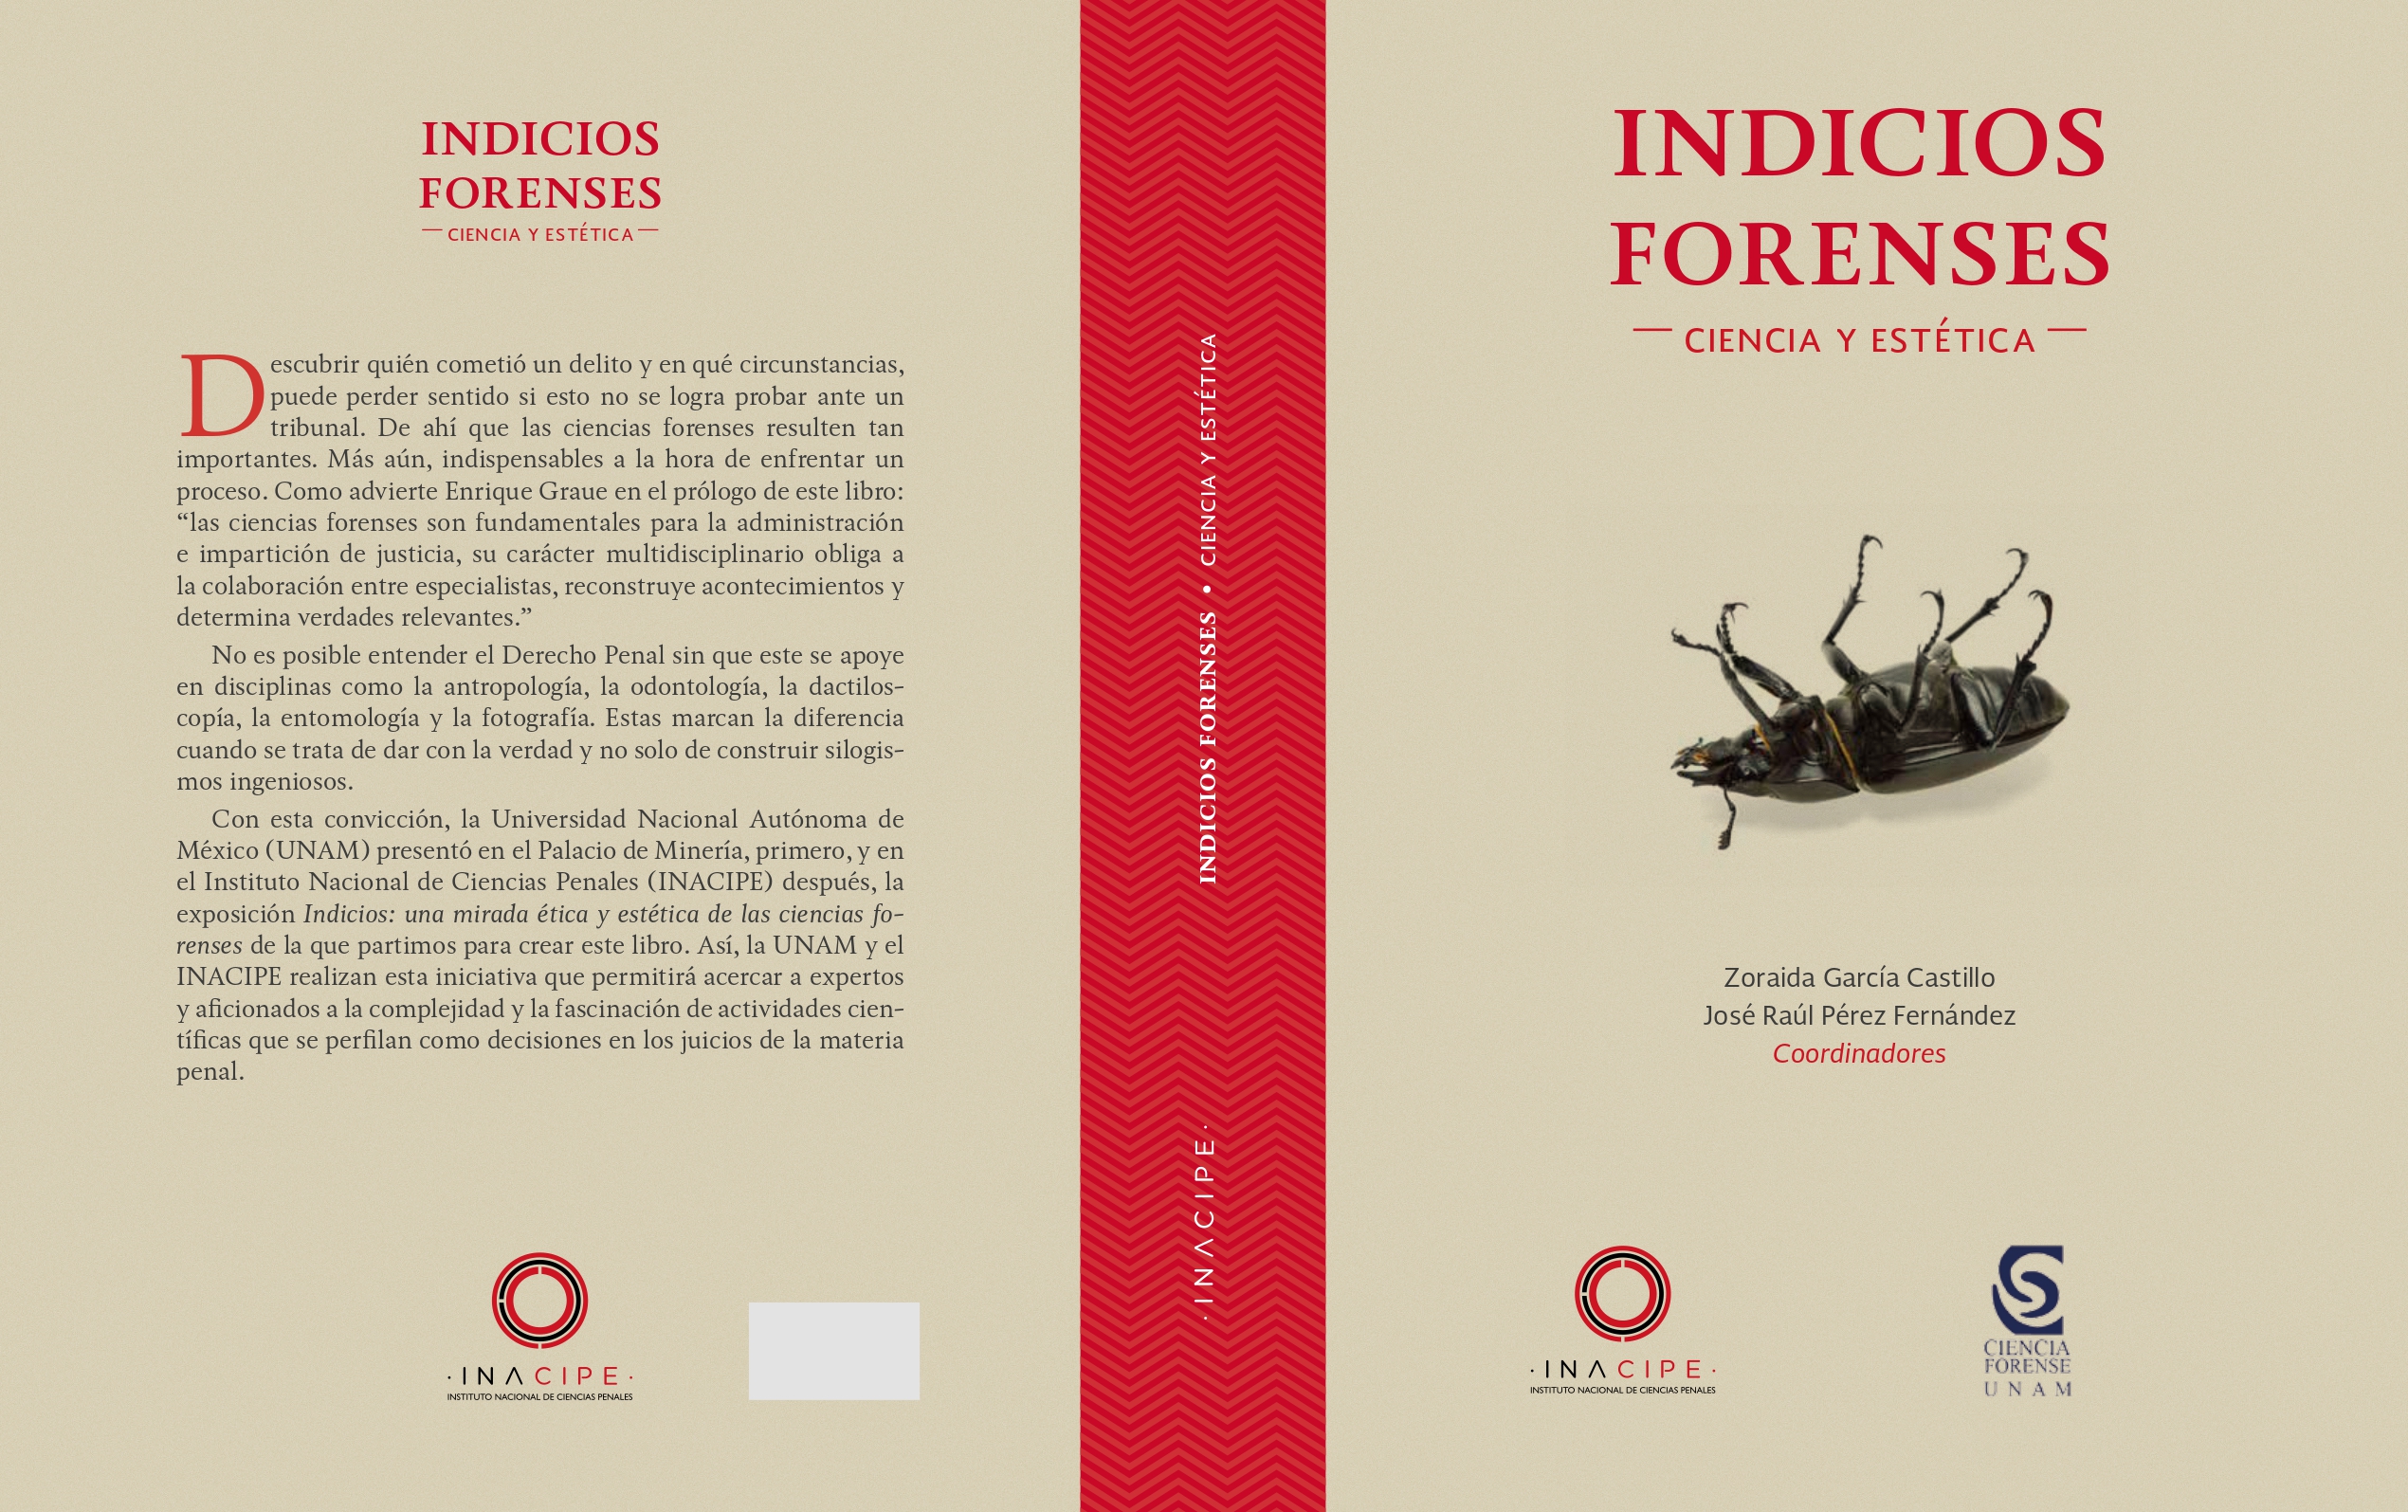 Forro Indicios forenses F1_page-0001